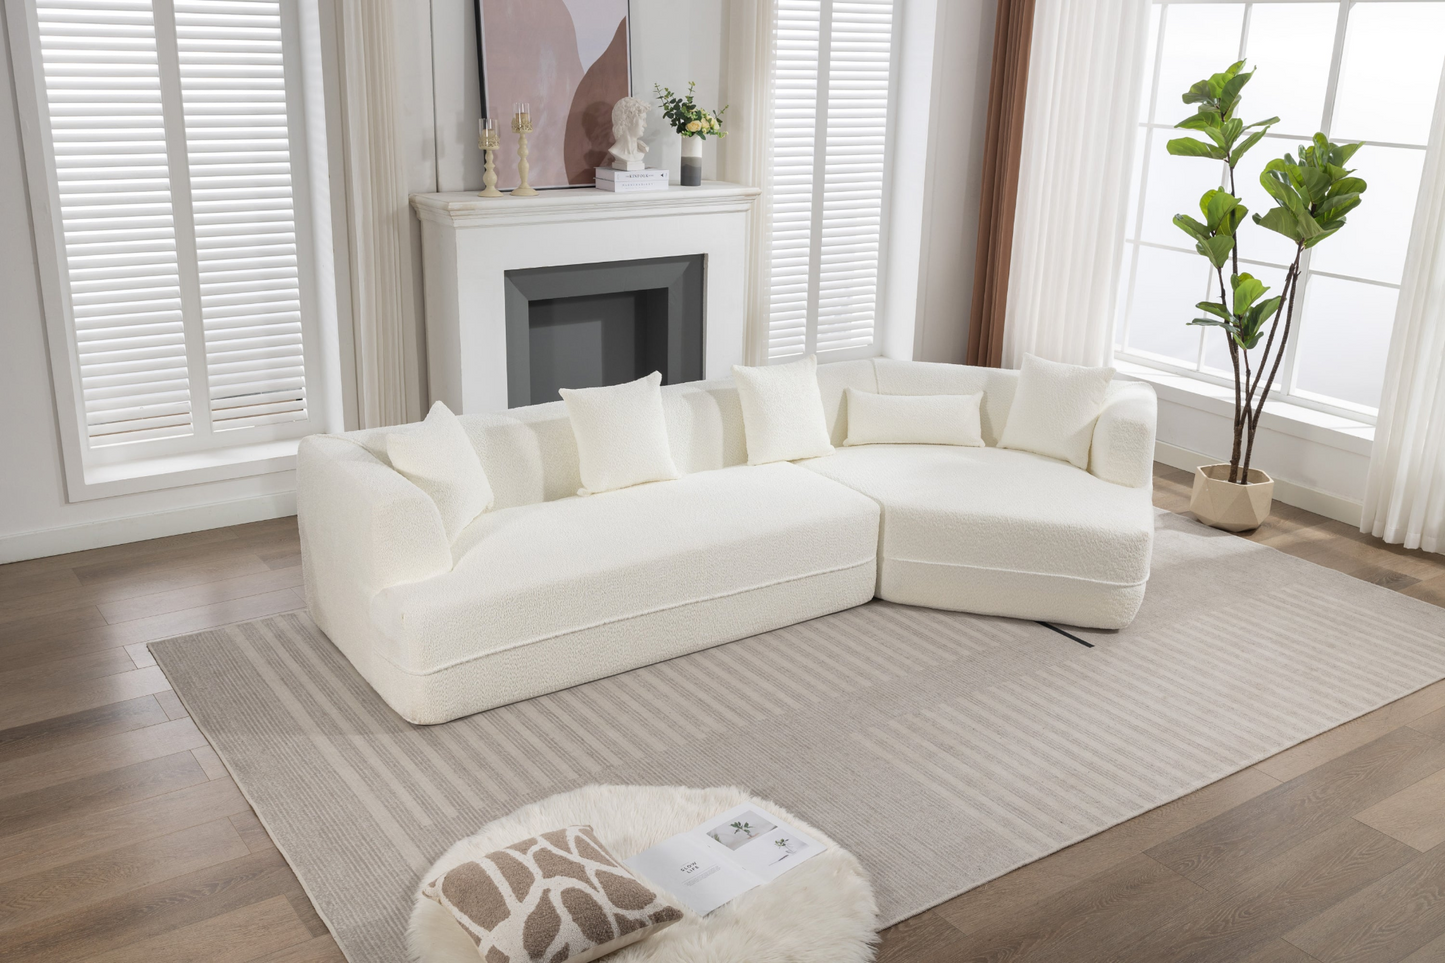 Modular Living room sofa set, modern minimalist style sofa, salon upholstered sleeper sofa, 2 PC free combination, round fiber fabric, anti-wrinkle fabric, creamy-white, Goodies N Stuff